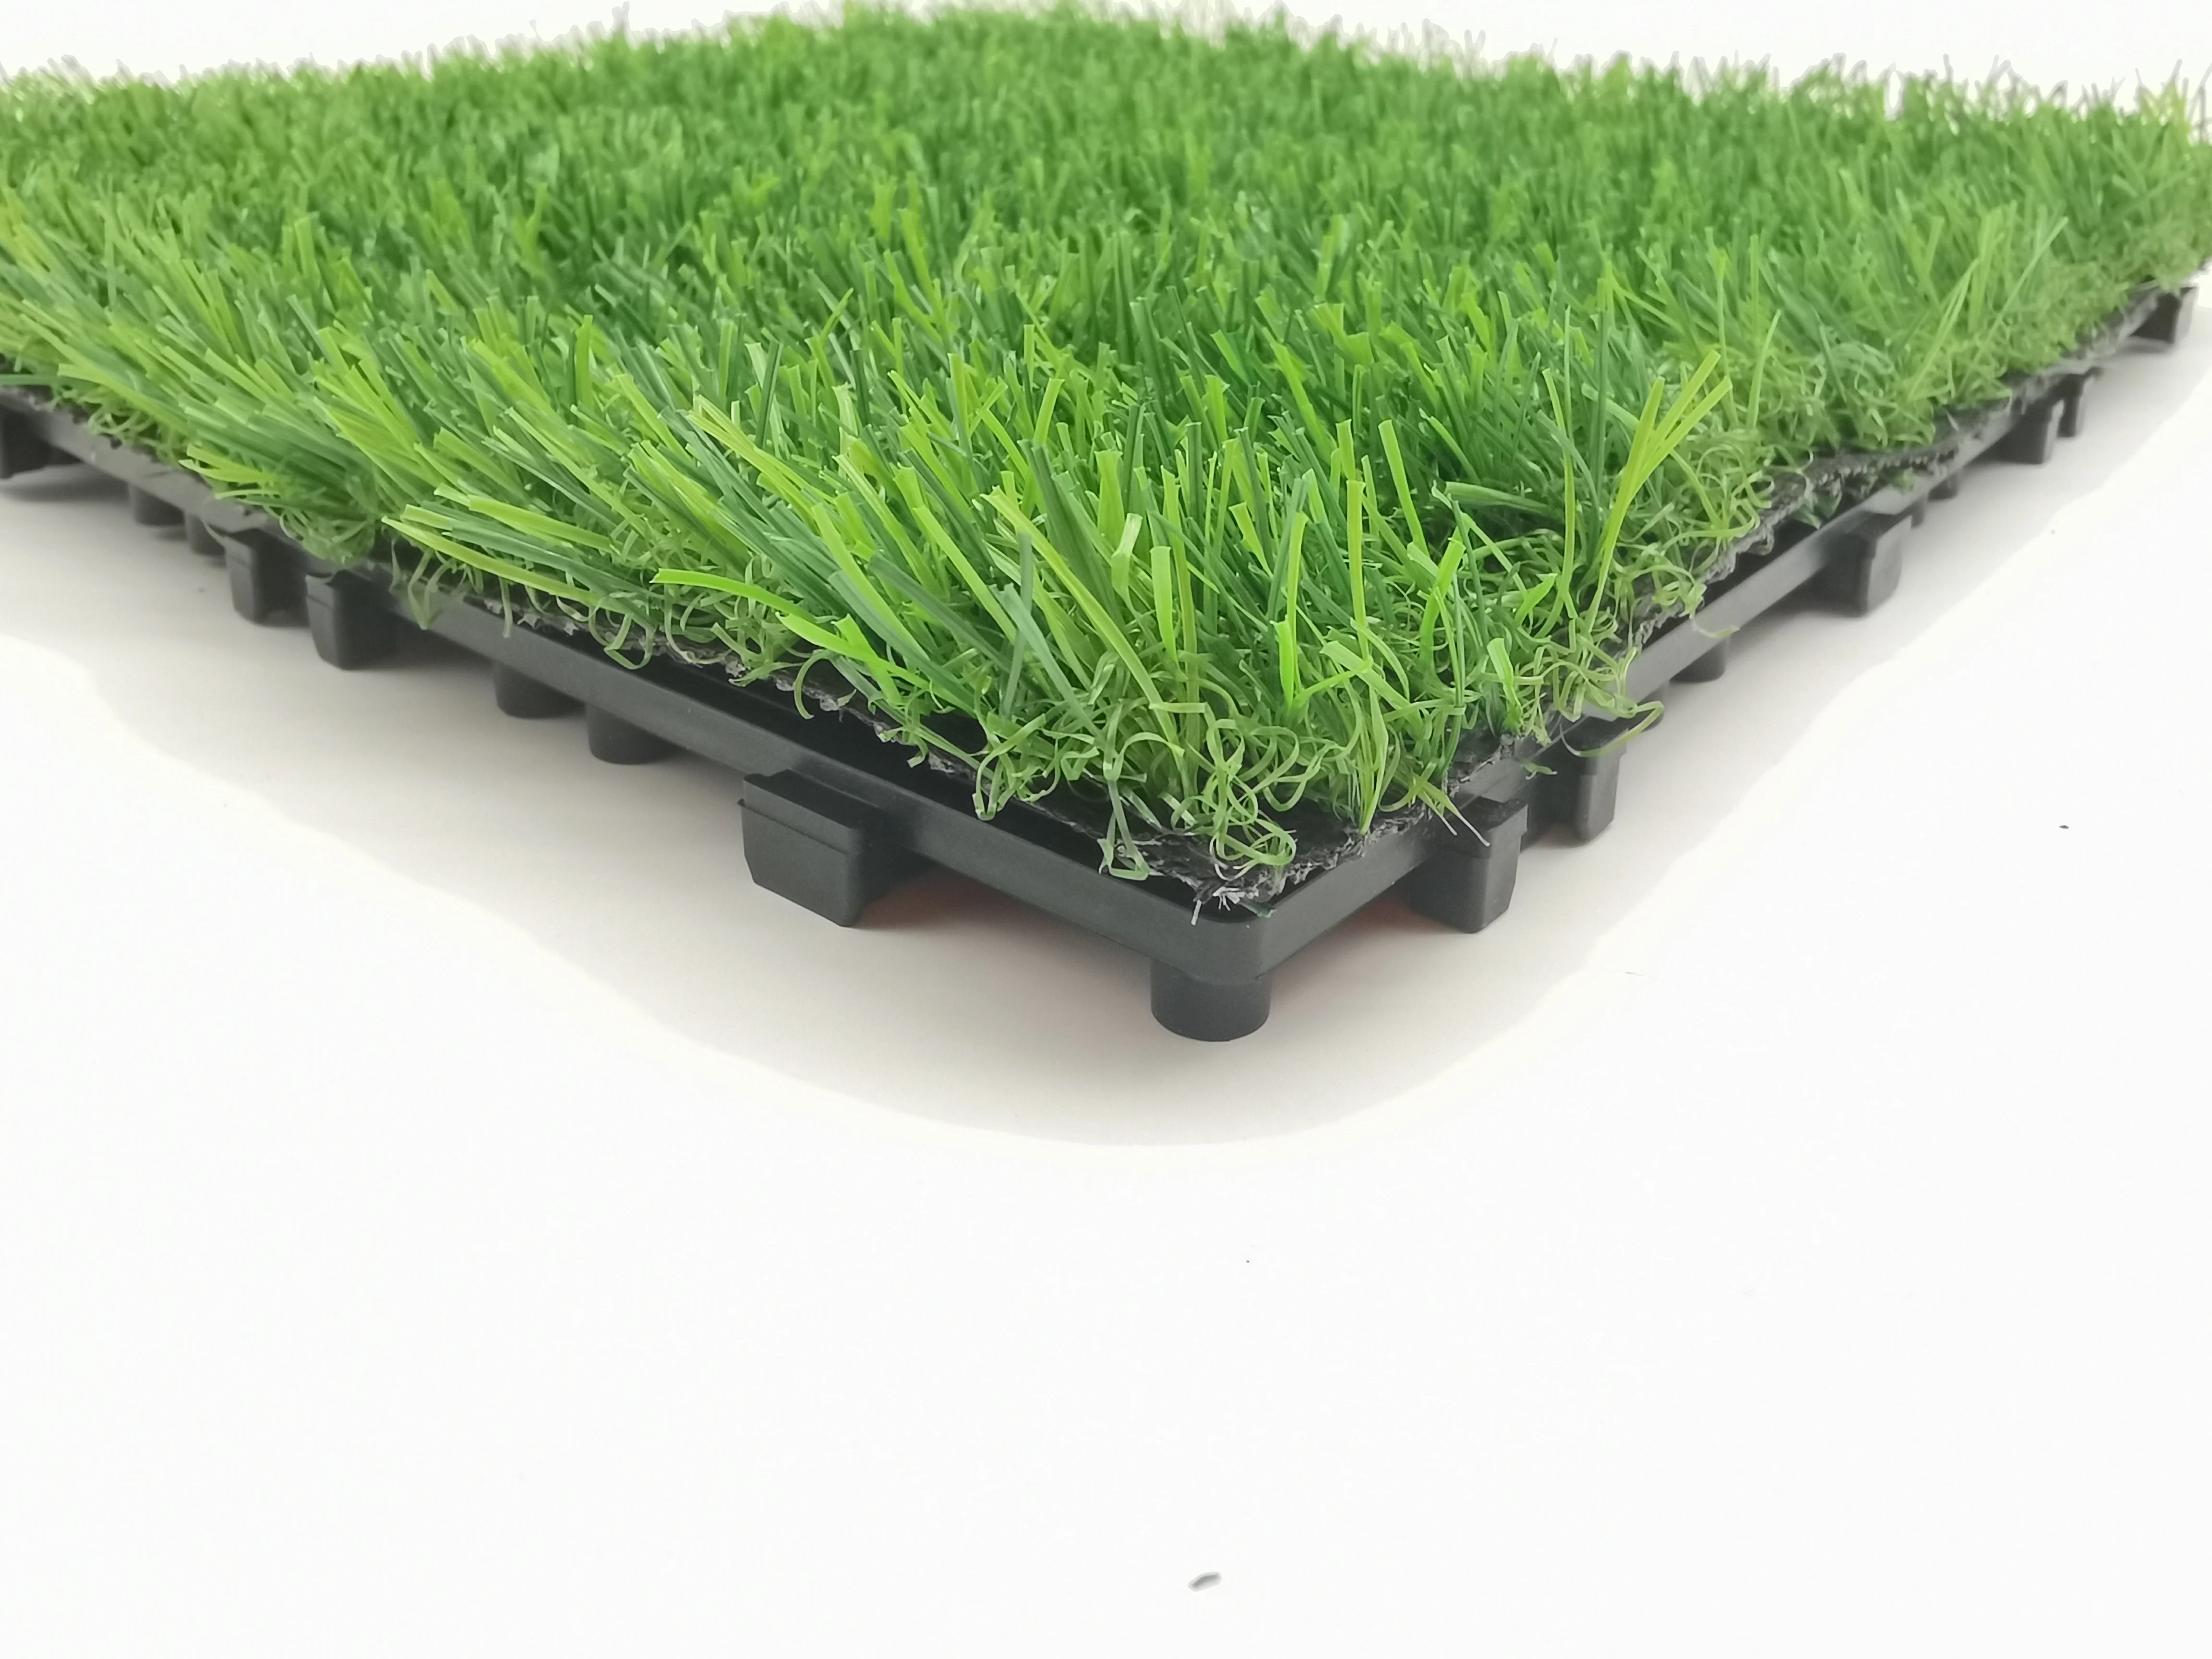 1x1 ft Realistic Turf Tile Interlocking Self-draining Mat 9 Pack ZTOUTDOOR Artificial Grass Mat for Patio Home Decoration 